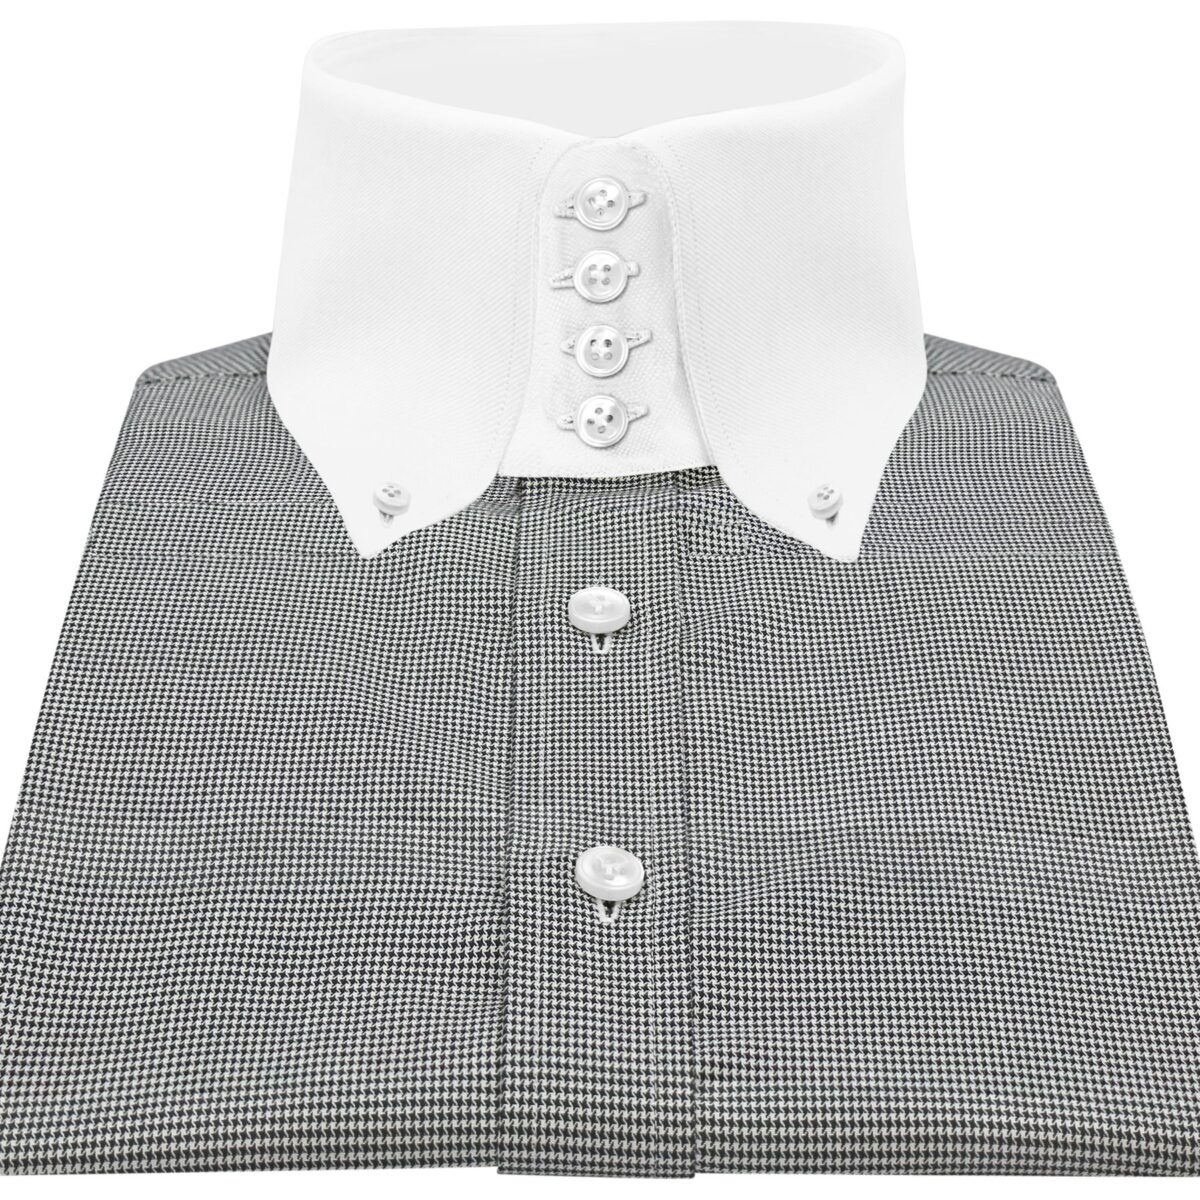 Black & White (Grey) Hounds tooth, High button down collar , 4 buttons on collar, 100% Cotton, made on order men's shirt by John Clothier London - Your original high collar shirt maker